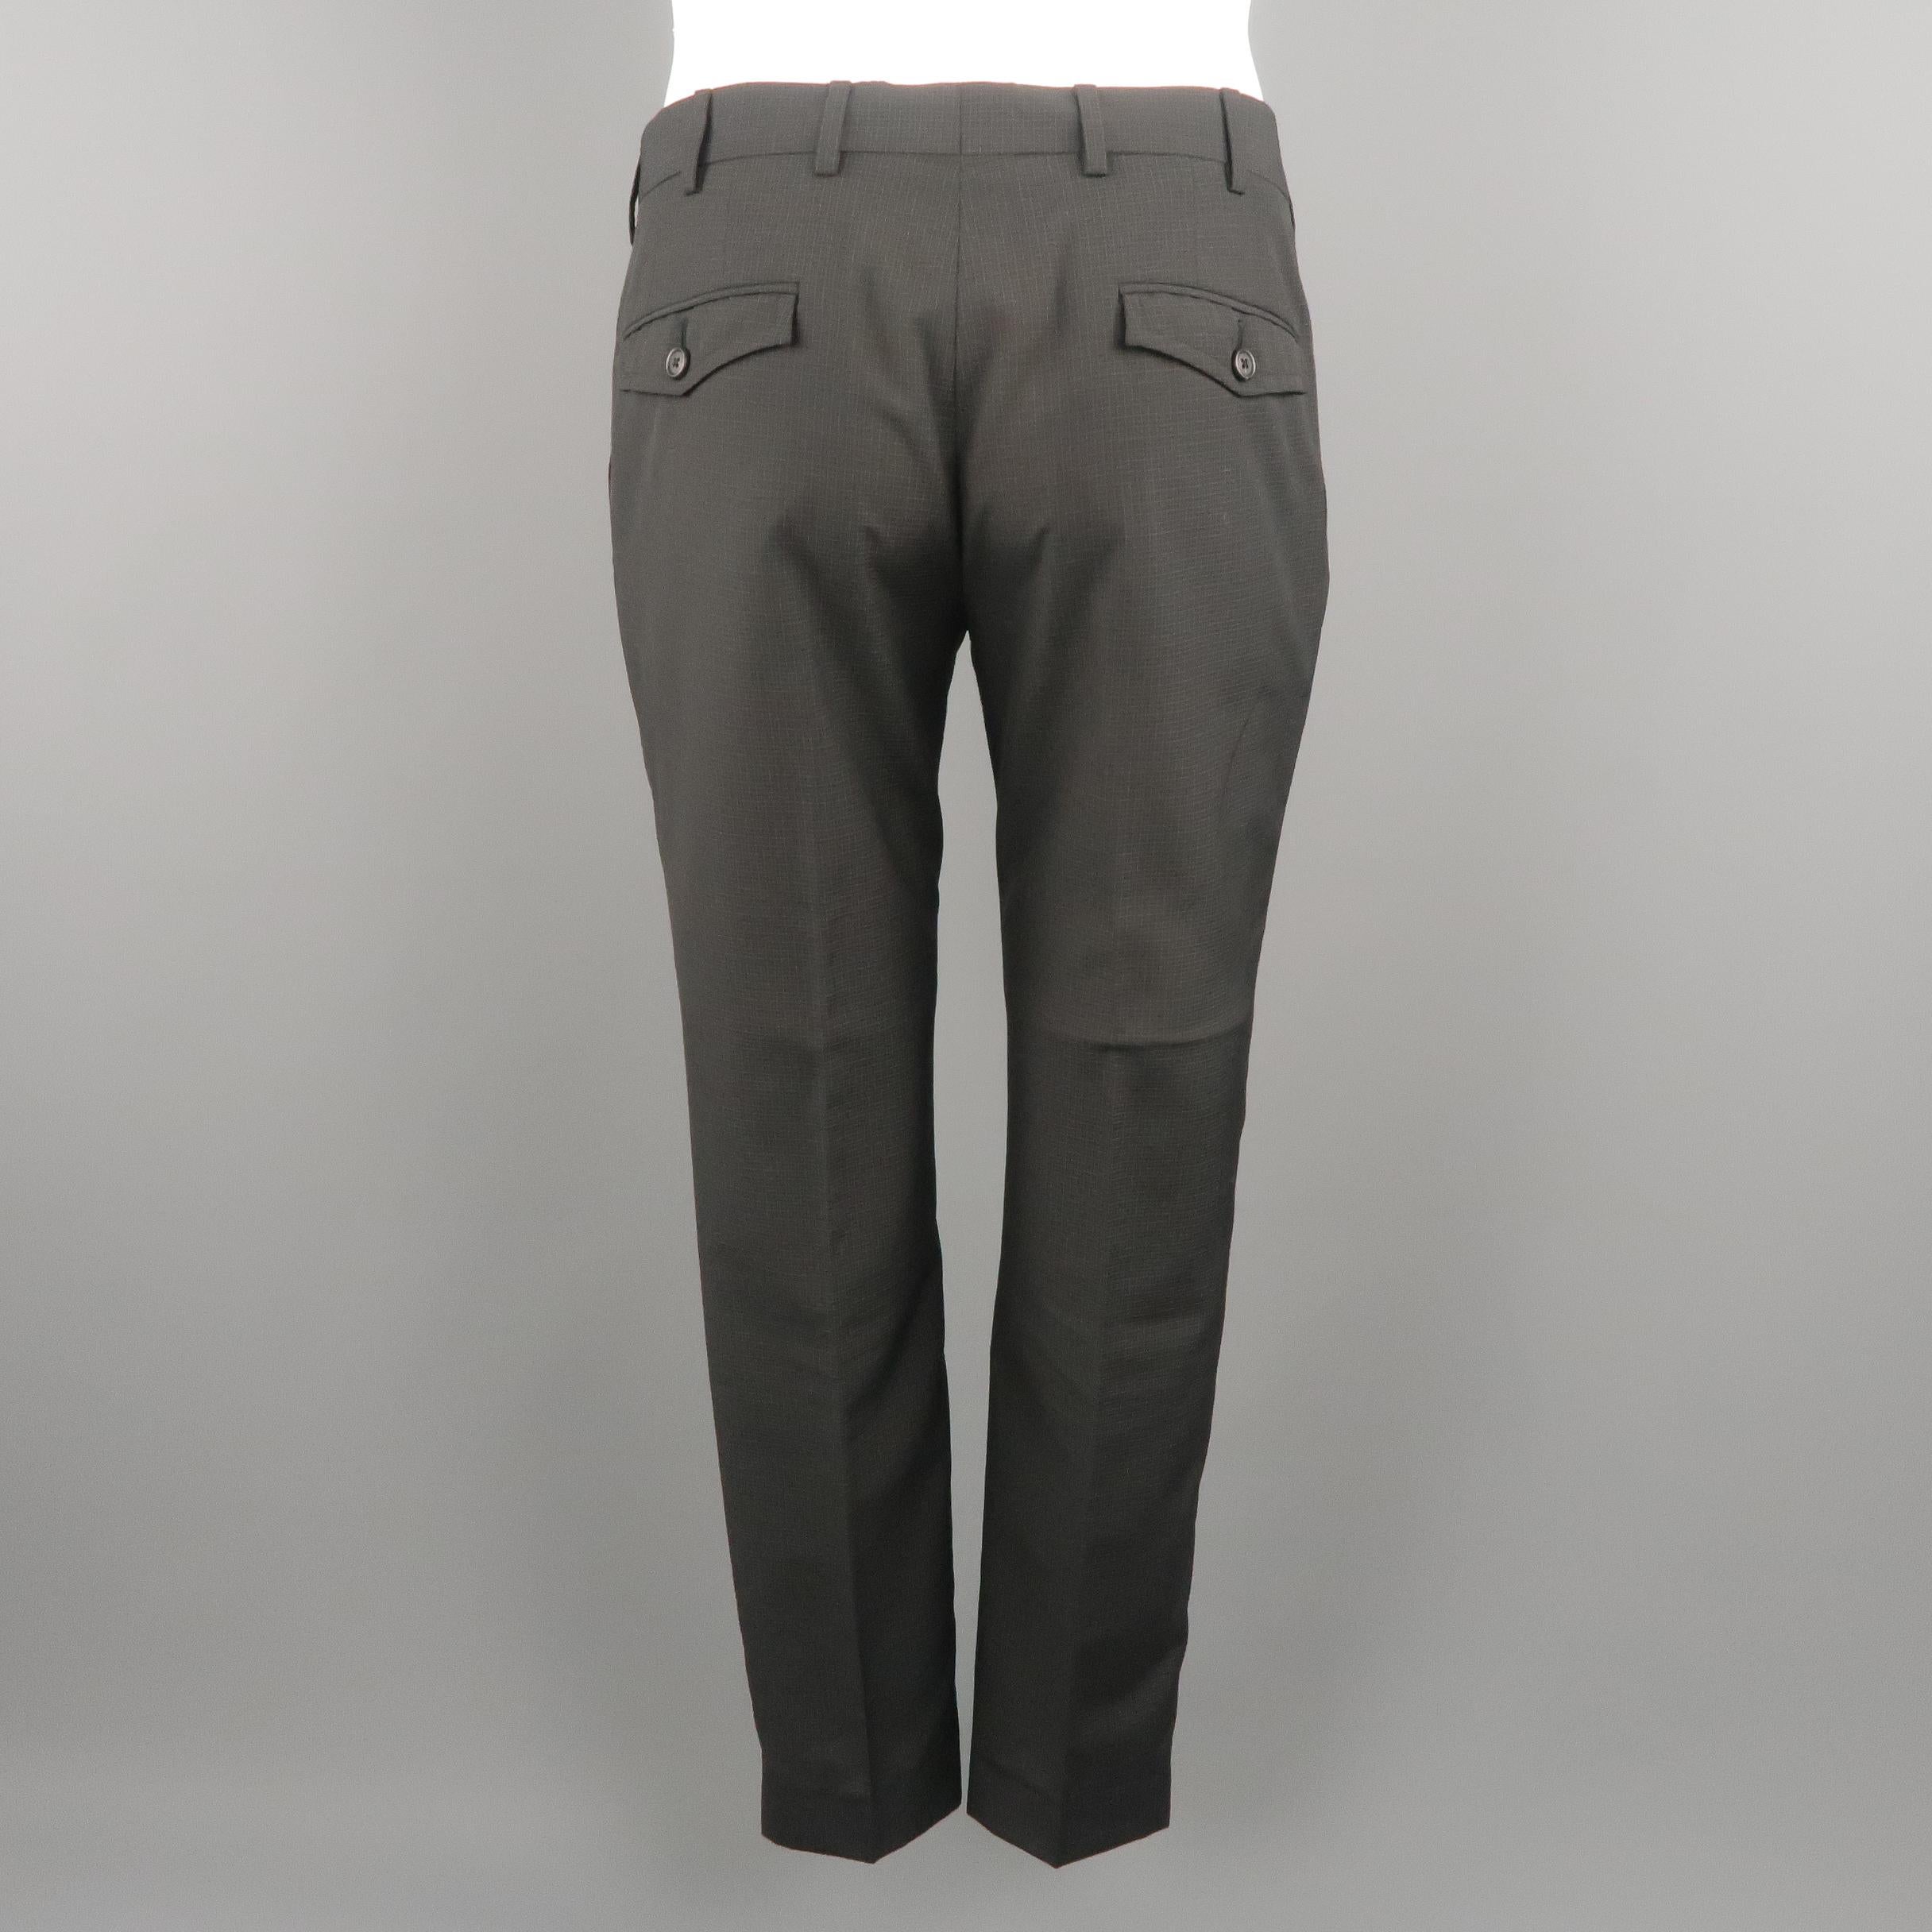 Men's PRADA Size 32 Charcoal Gingham Wool Dress Pants